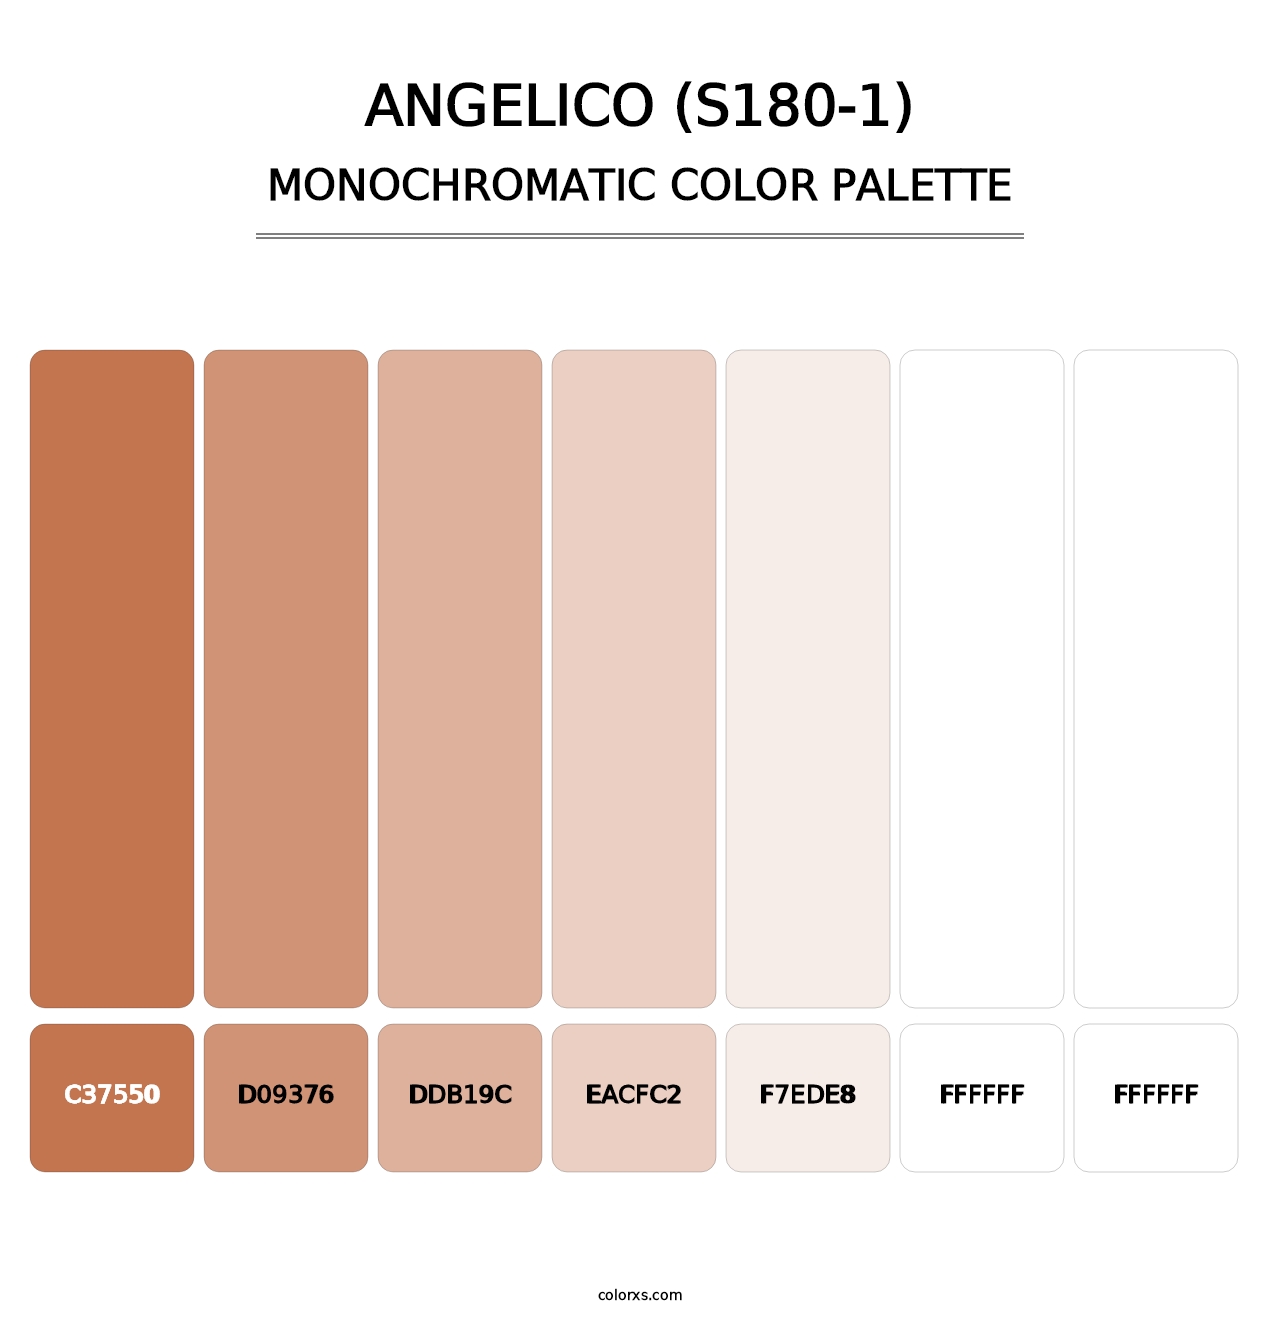 Angelico (S180-1) - Monochromatic Color Palette